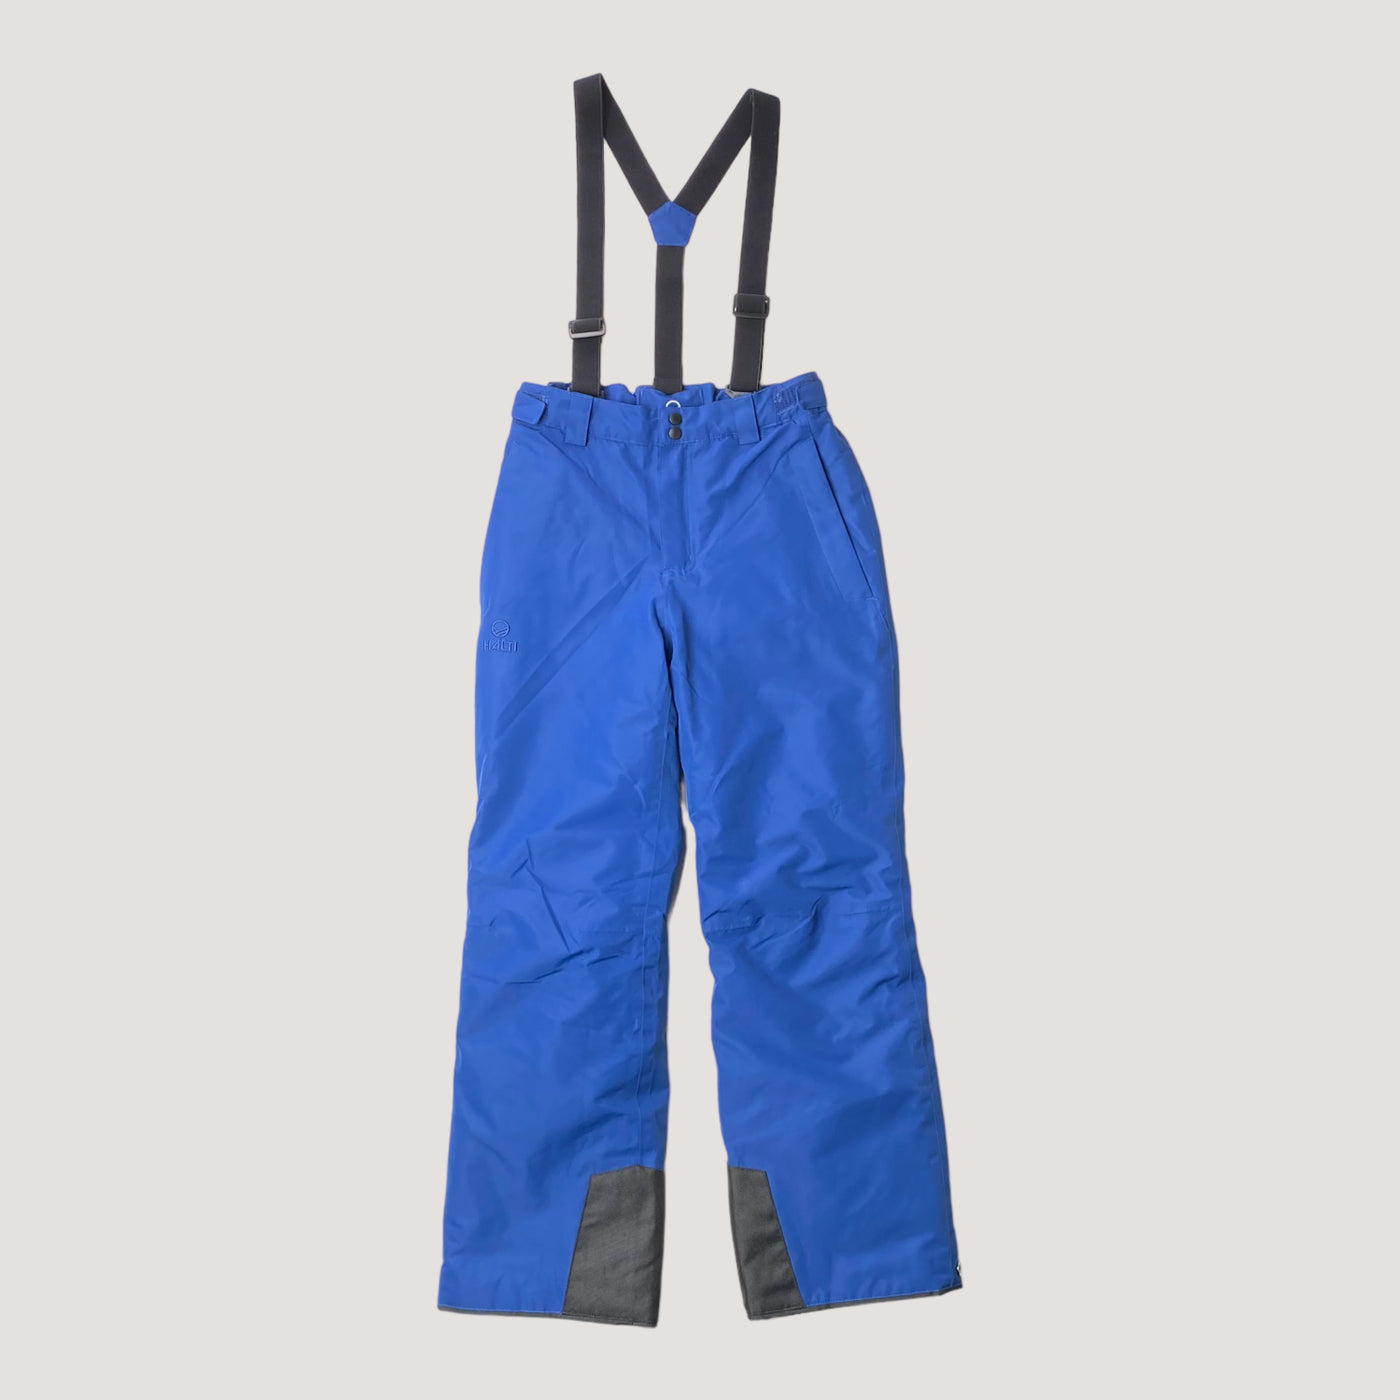 Halti ski pants, blue | 150cm